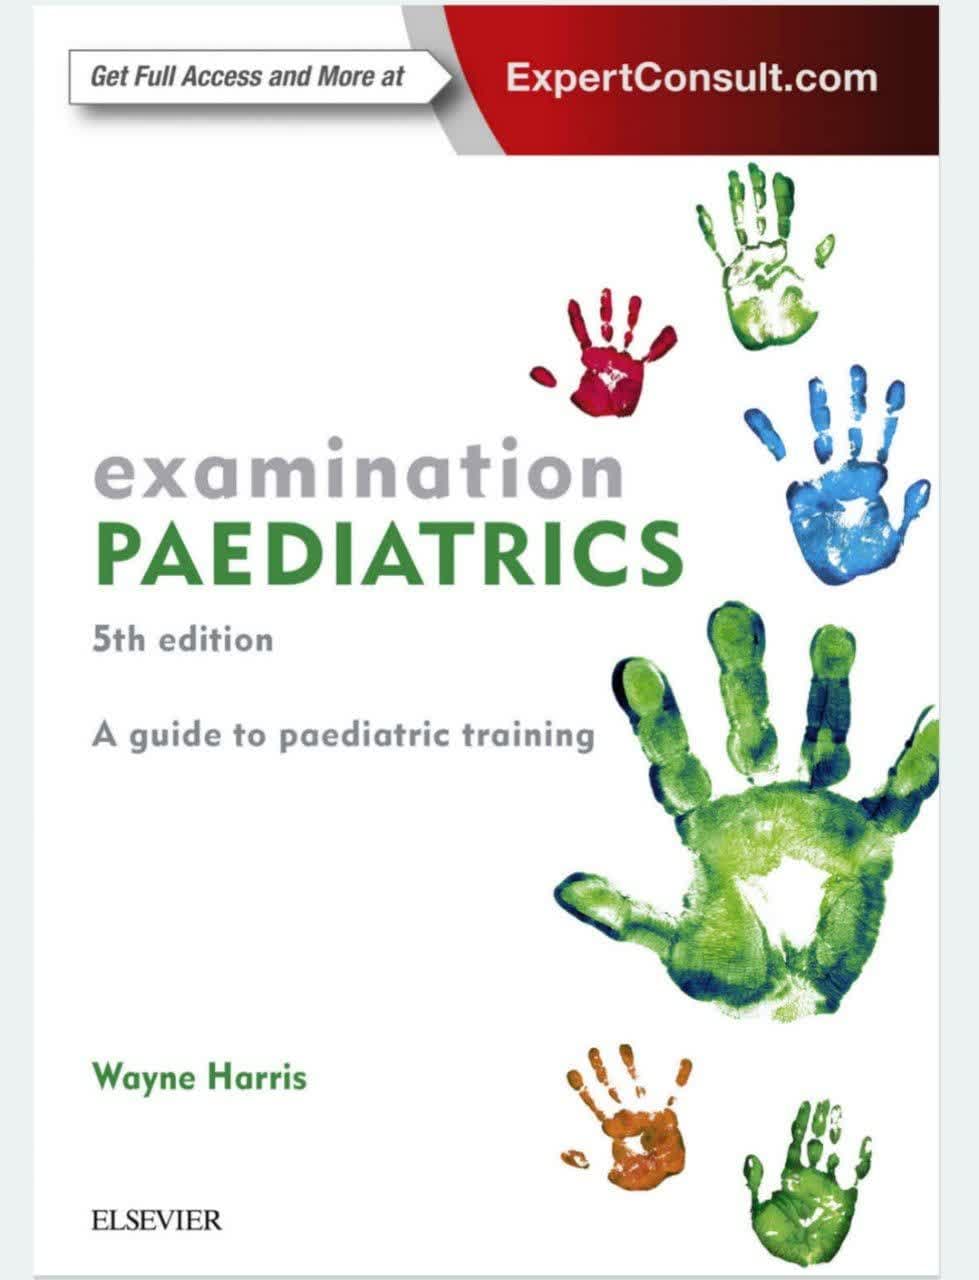 examination PAEDIATRICS 5th edition - معاینات اطفال ویرایش پنجم